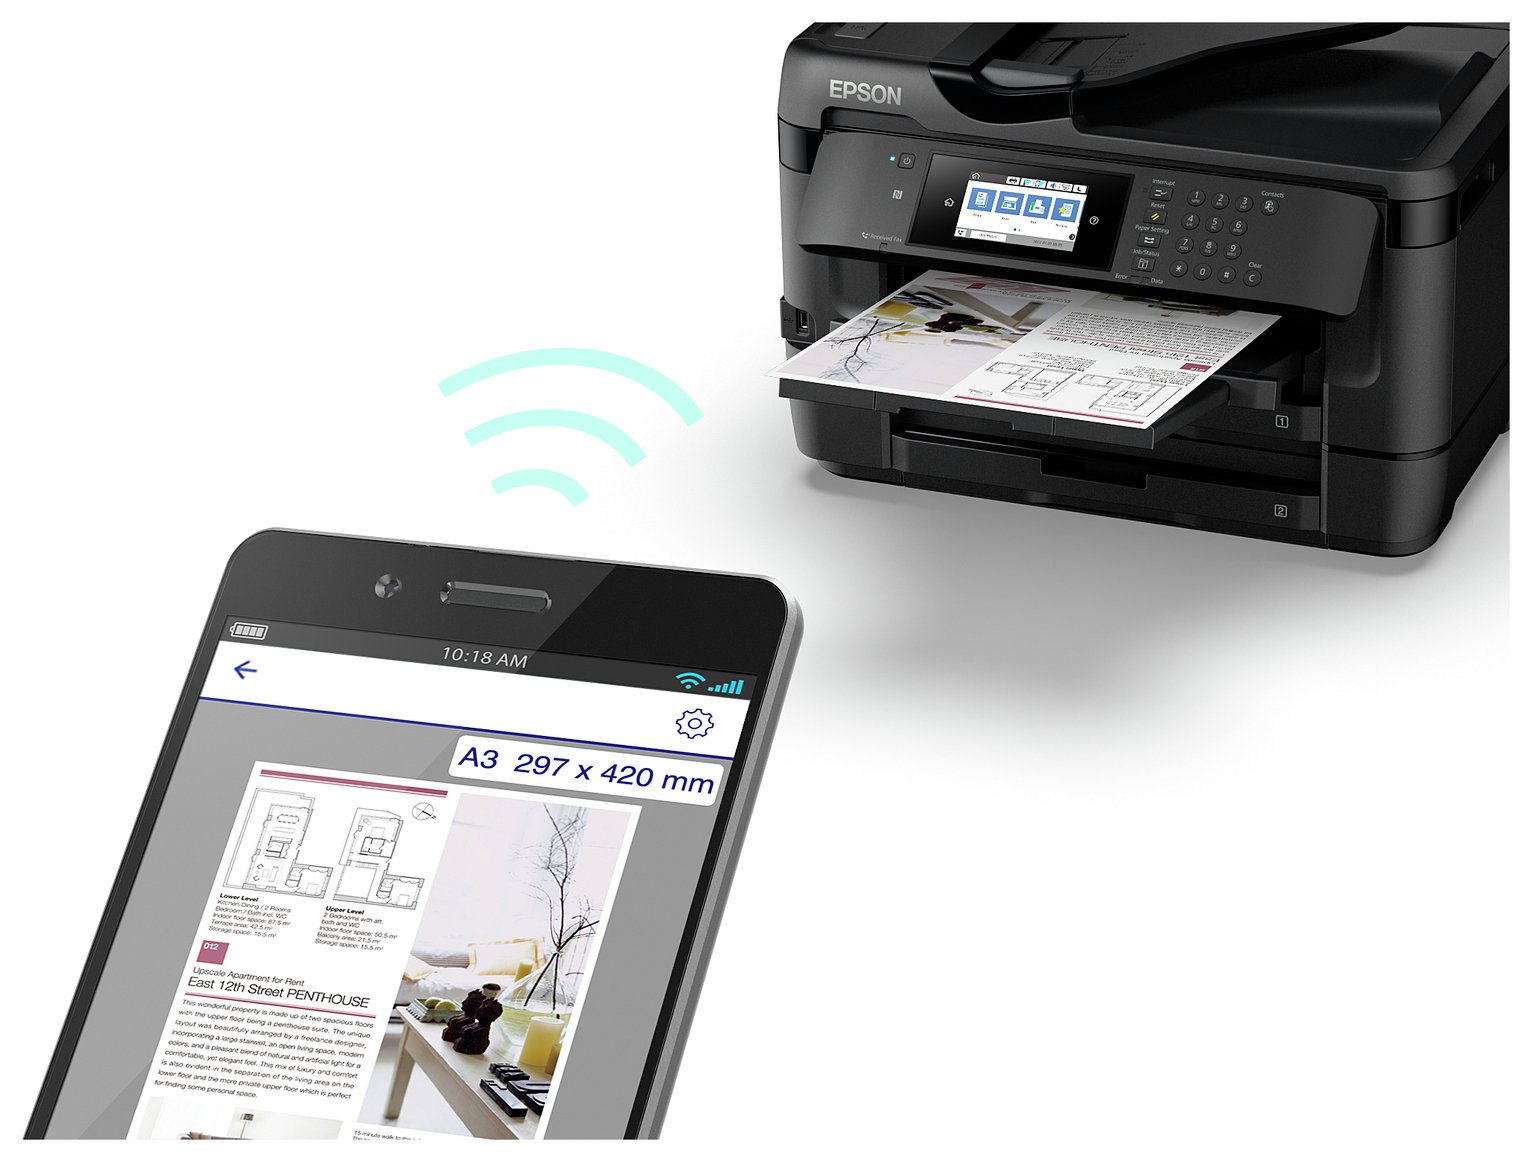 Epson Workforce Wf 7720 All In One Wireless Printer Reviews 9859